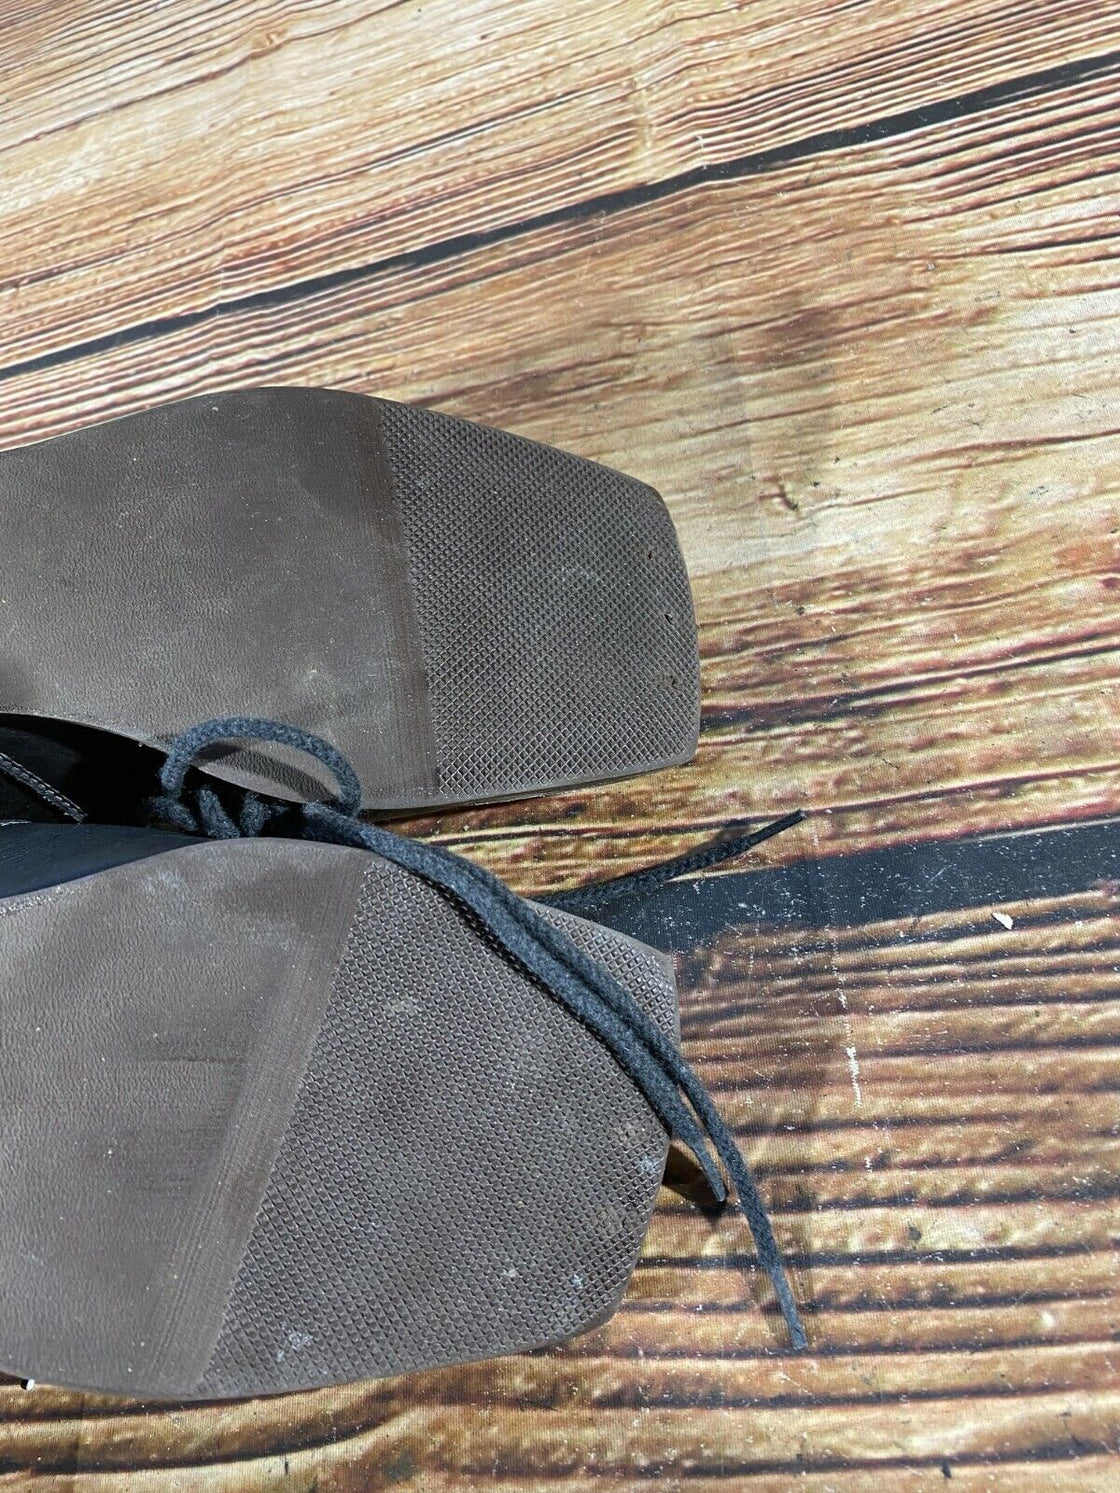 RENNSTEIG Vintage Cross Country Ski Boots Kandahar Old Cable Bindings EU38 US6